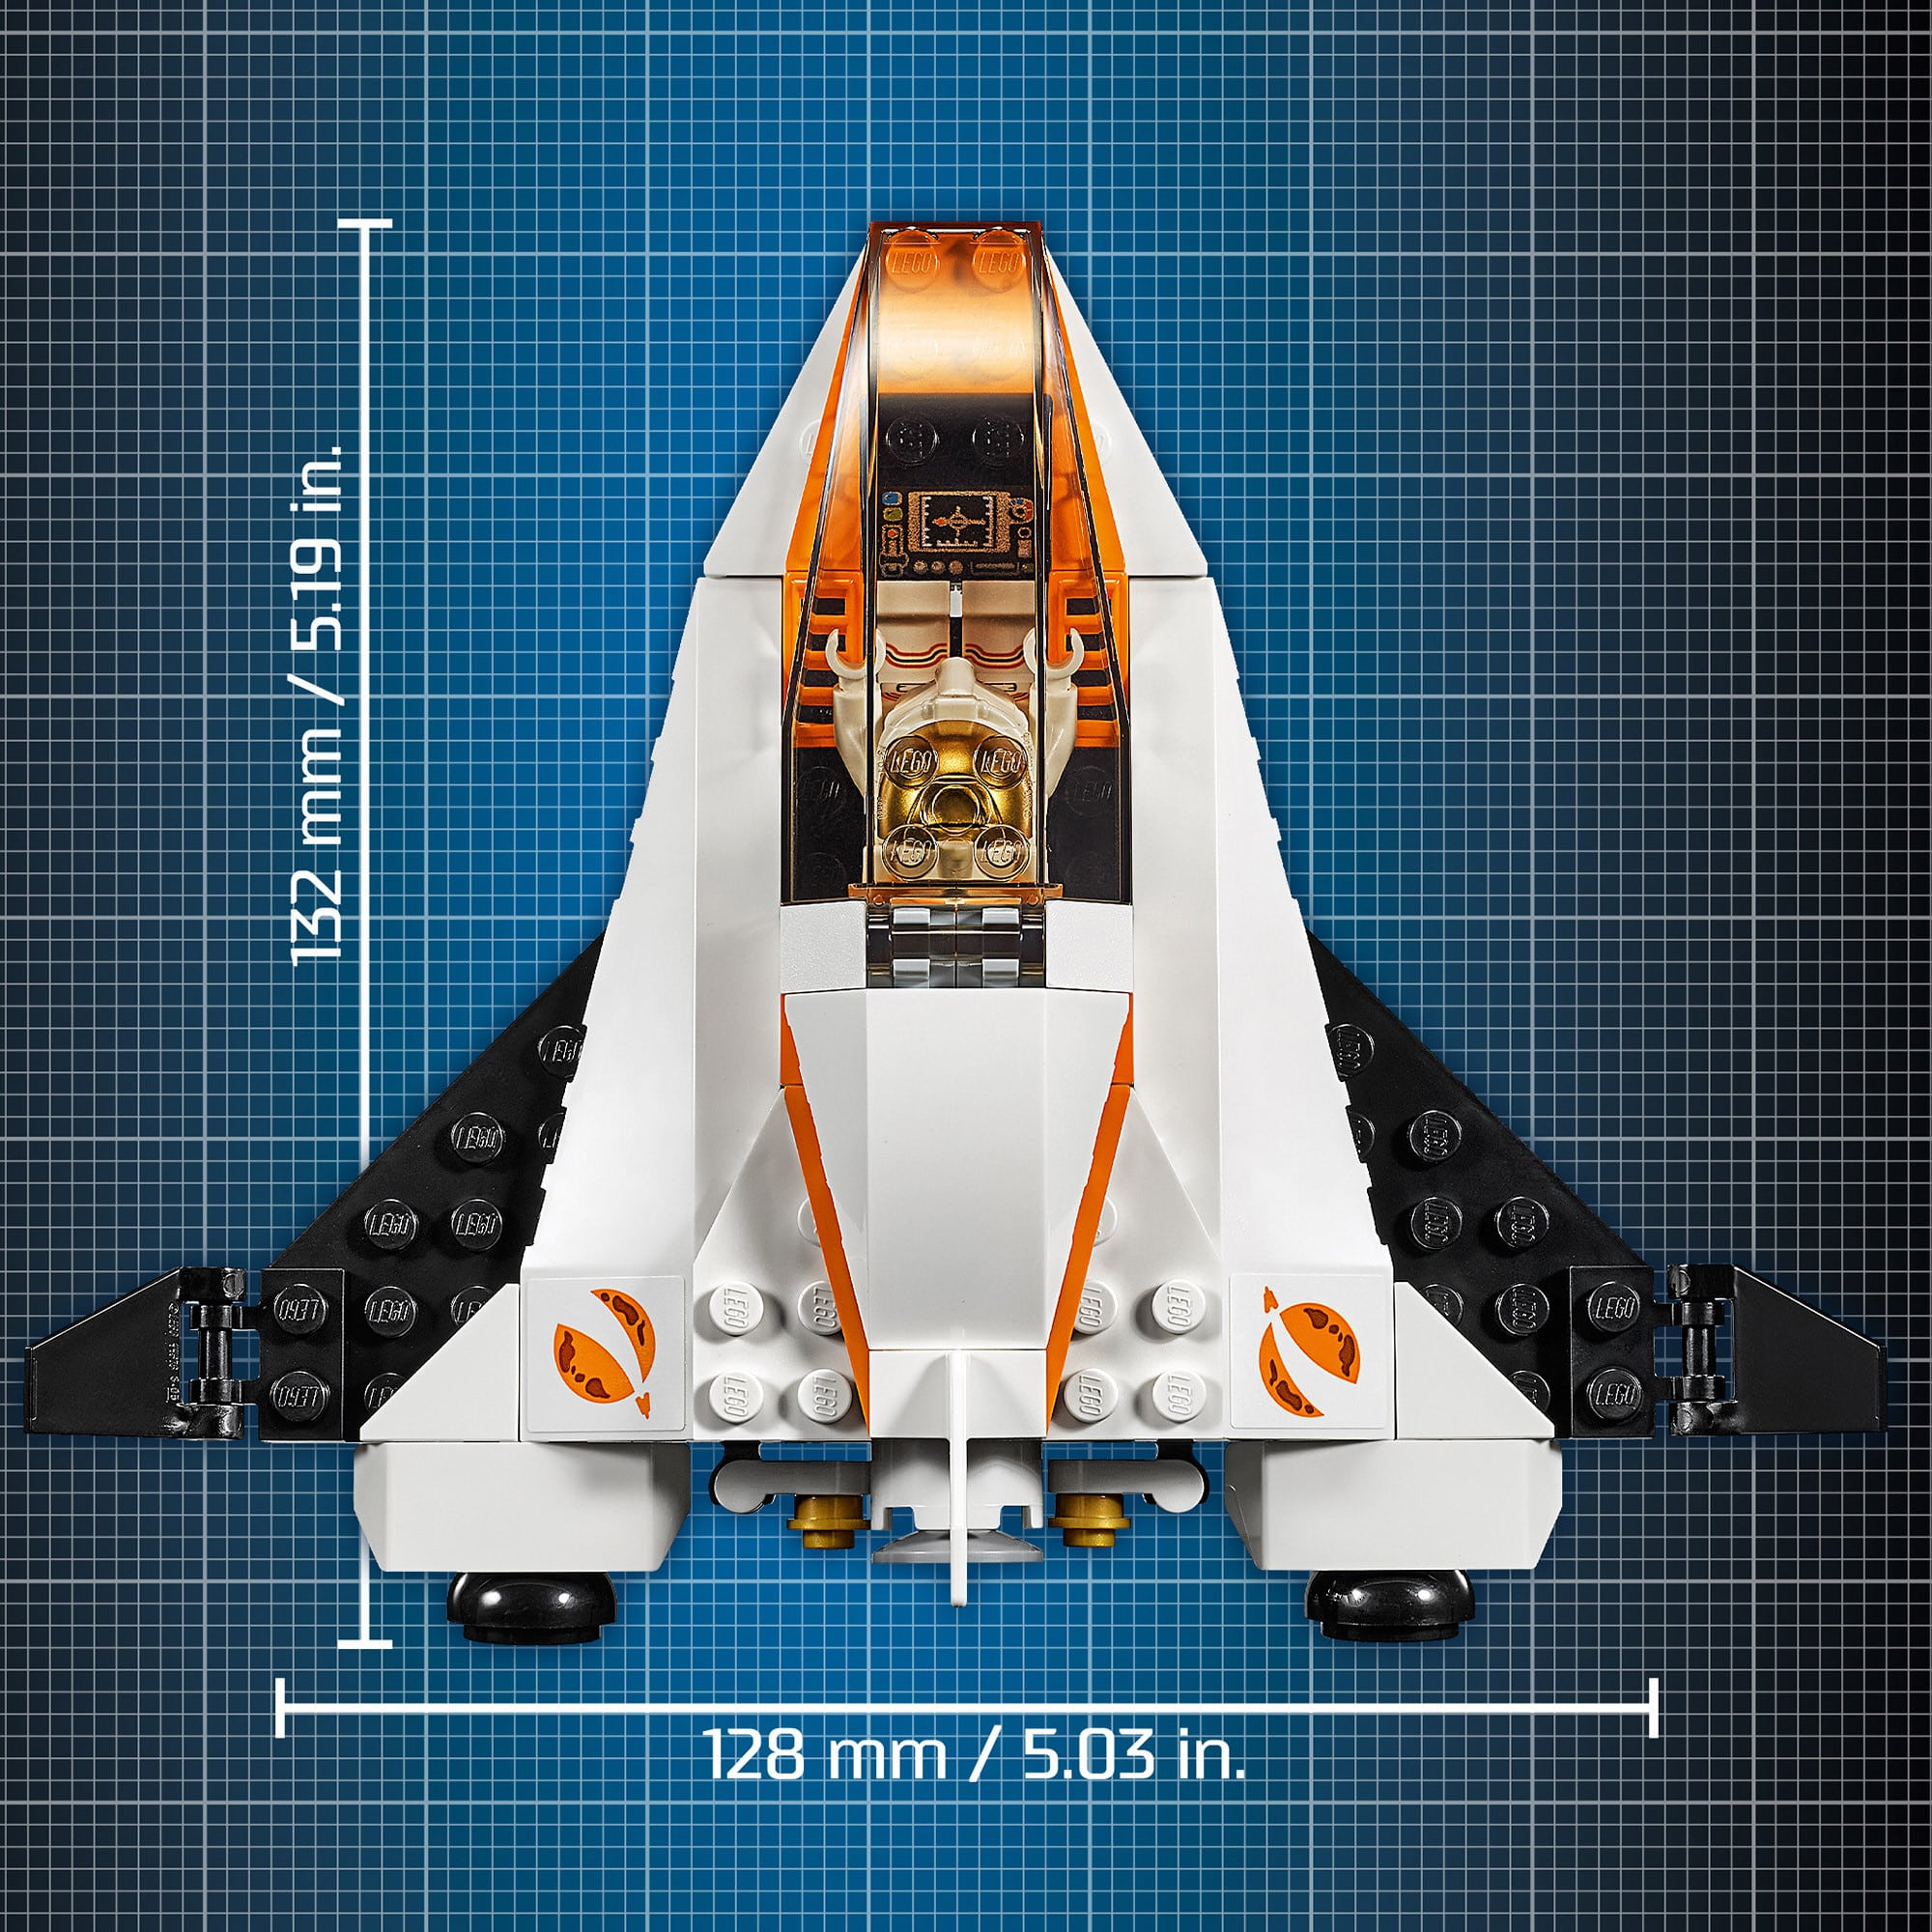 LEGO City - 60224 Satellite Service Mission